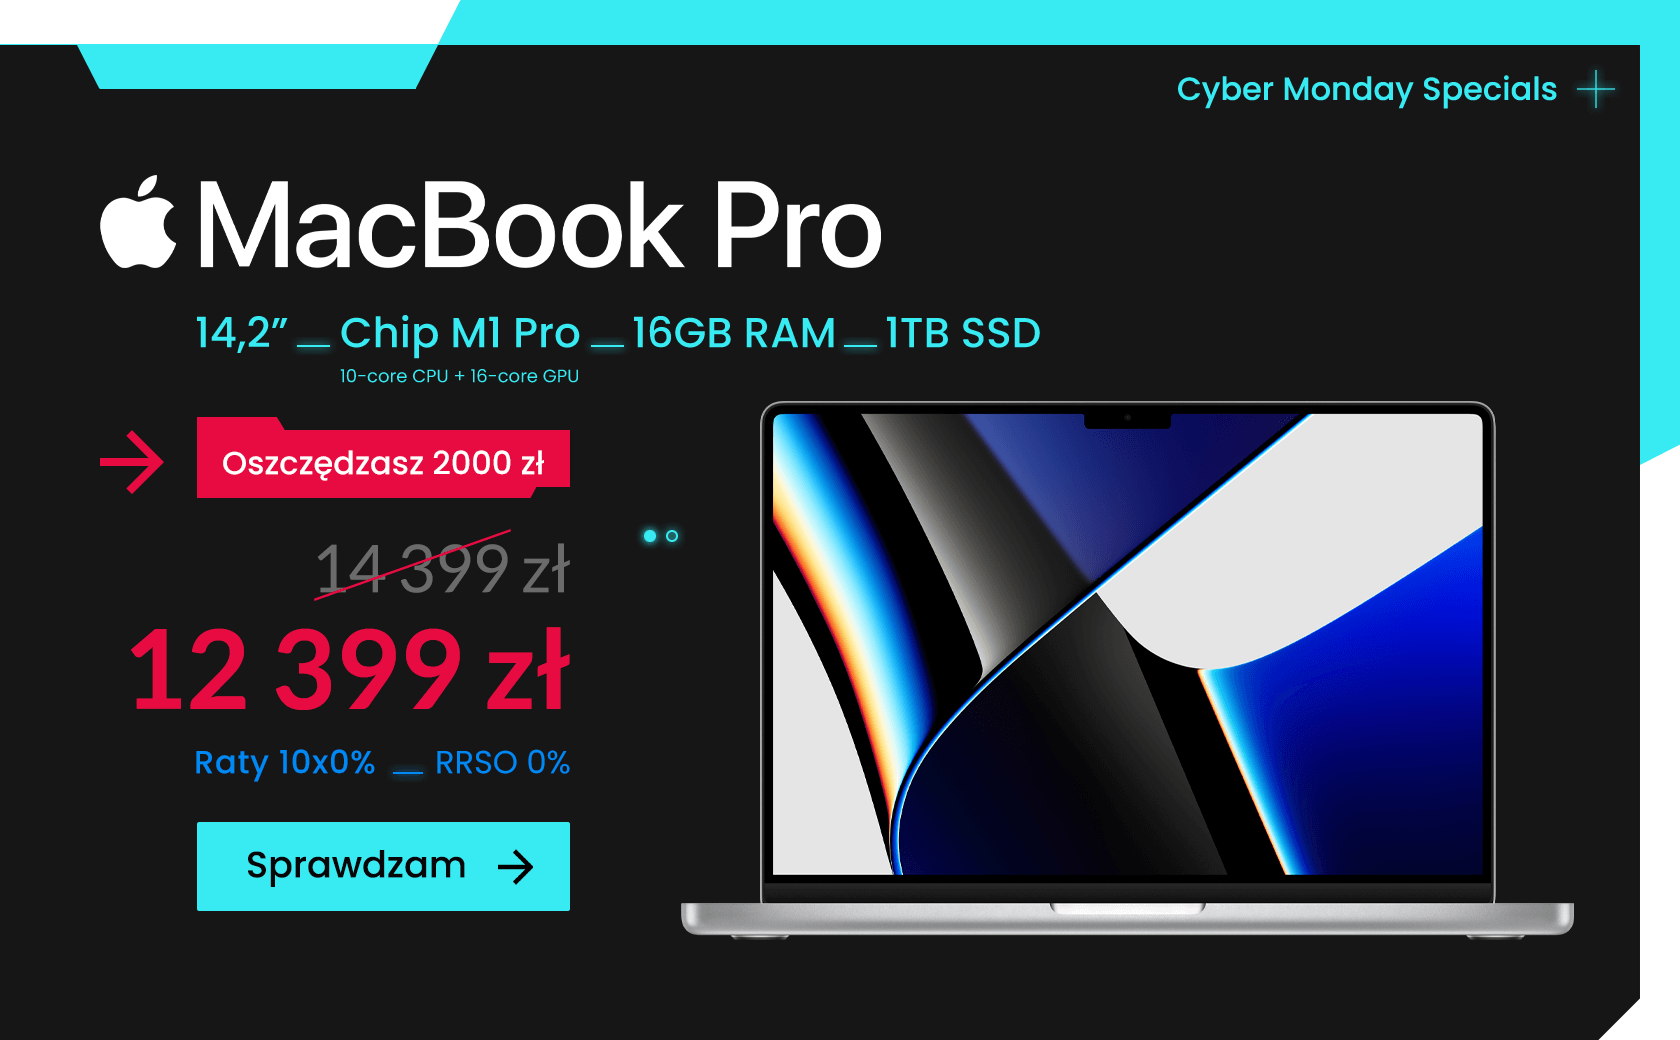 Cyber Monday Specials - MacBook Pro 14